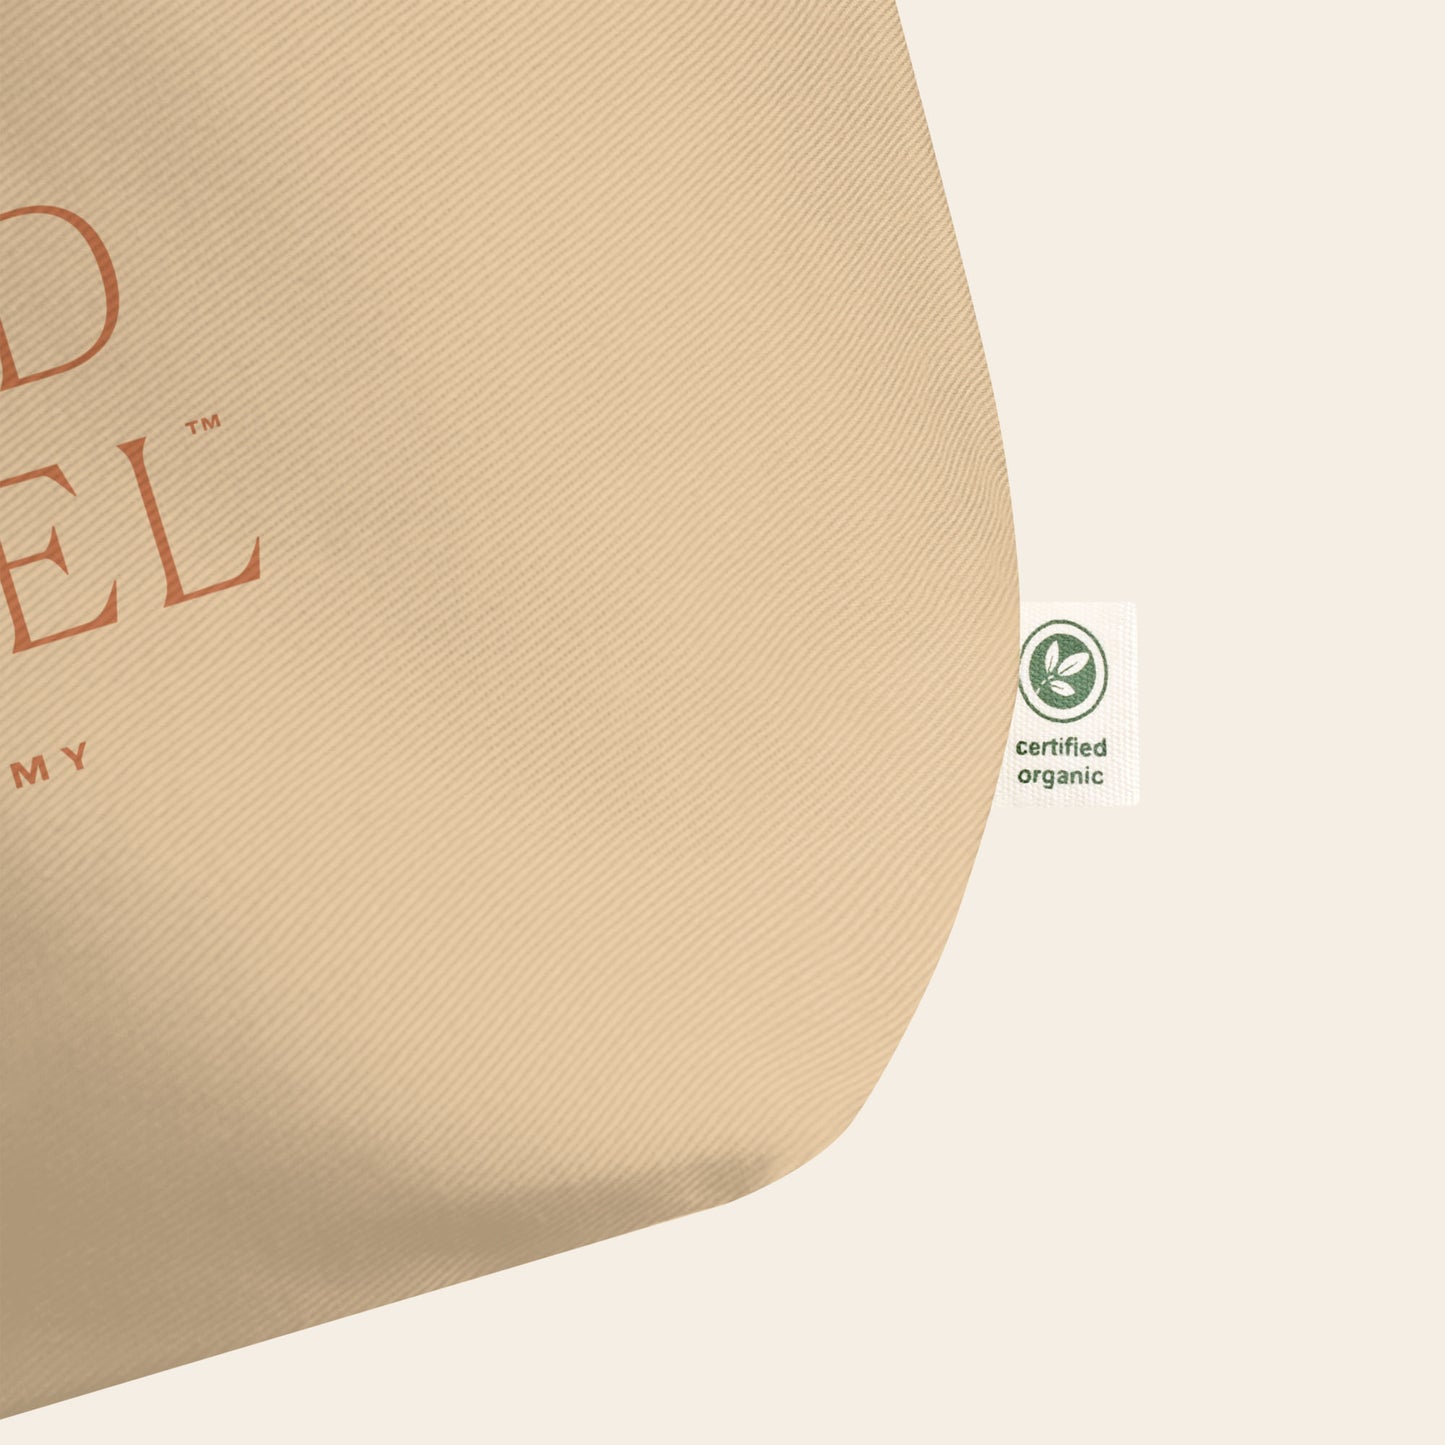 The Mind Rebel™ Academy Large Organic Tote Bag